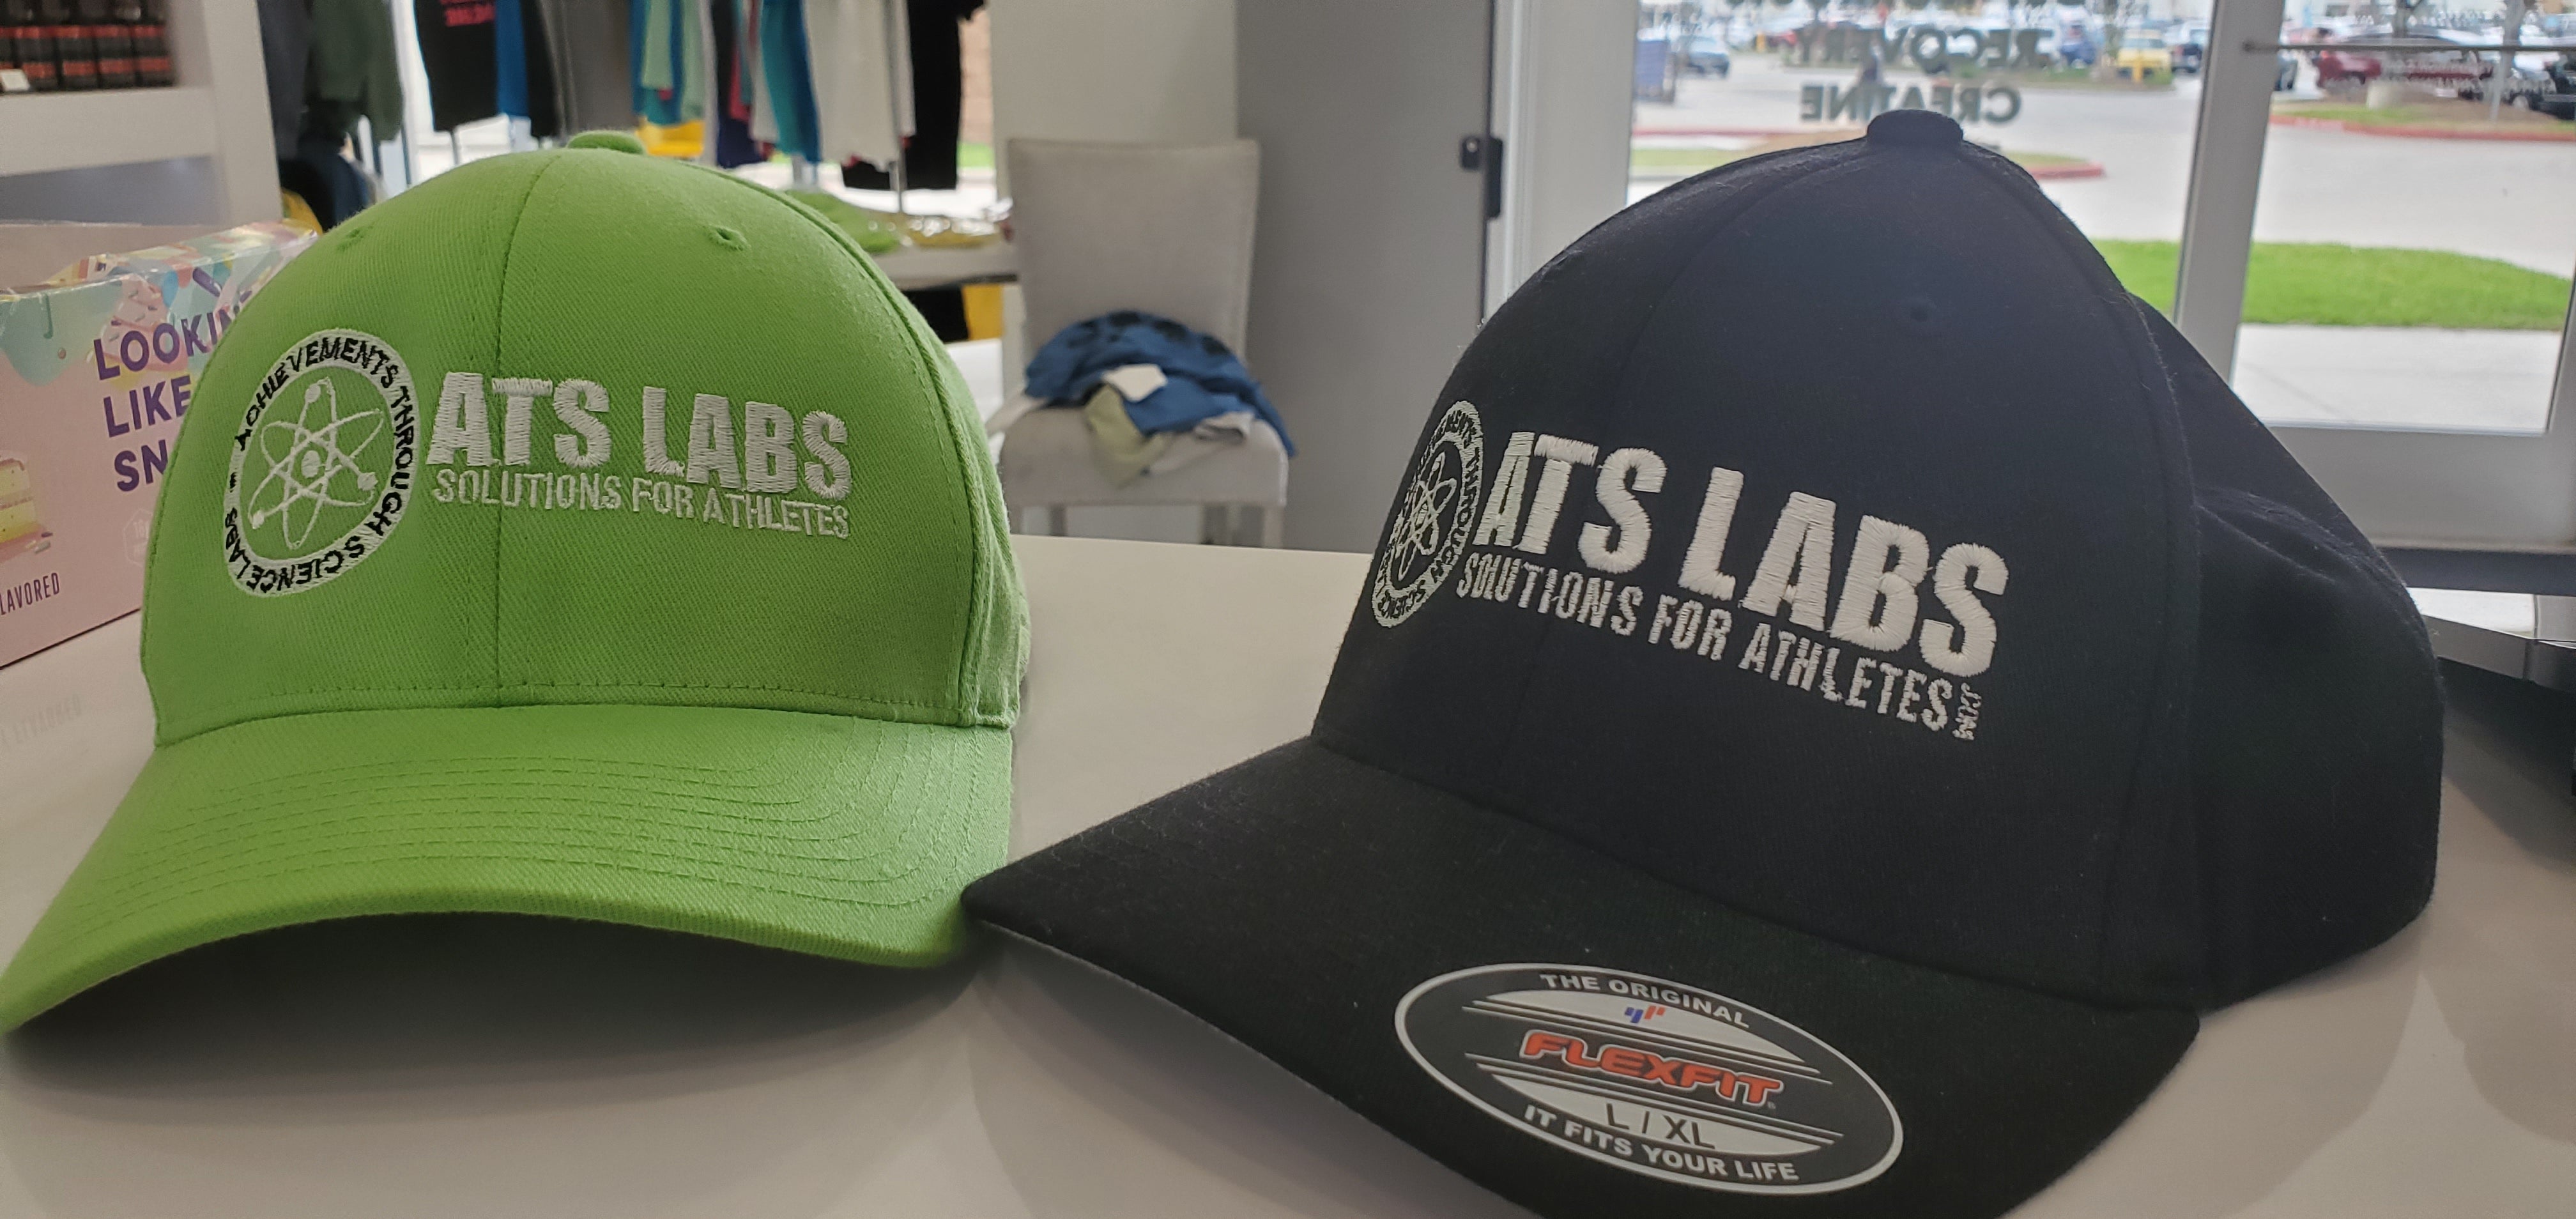 ATS Labs L/XL flex fit hat